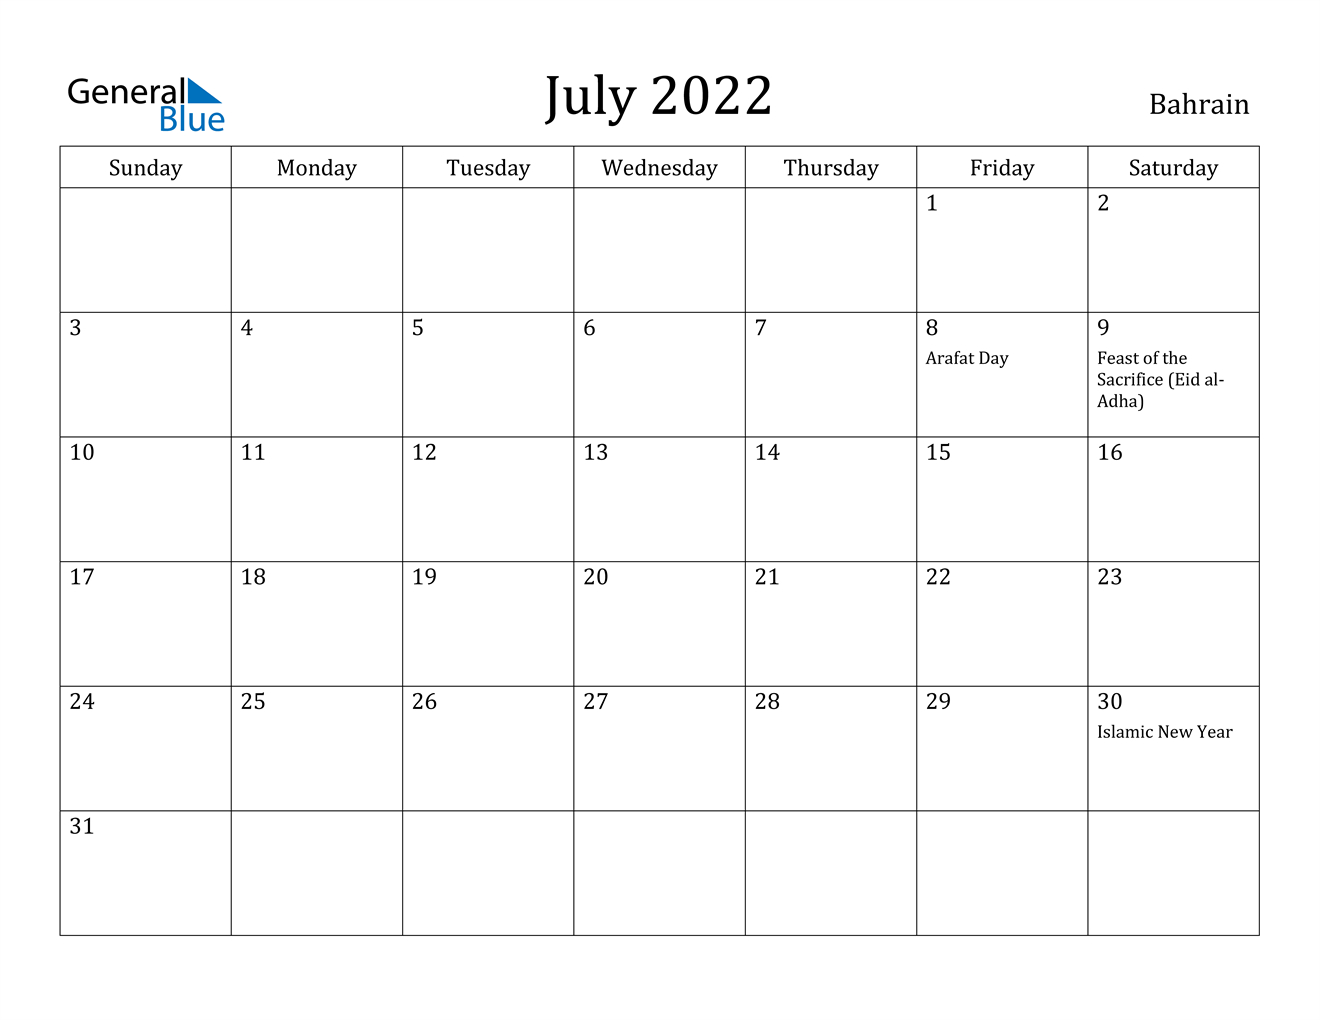 July 2022 Calendar - Bahrain